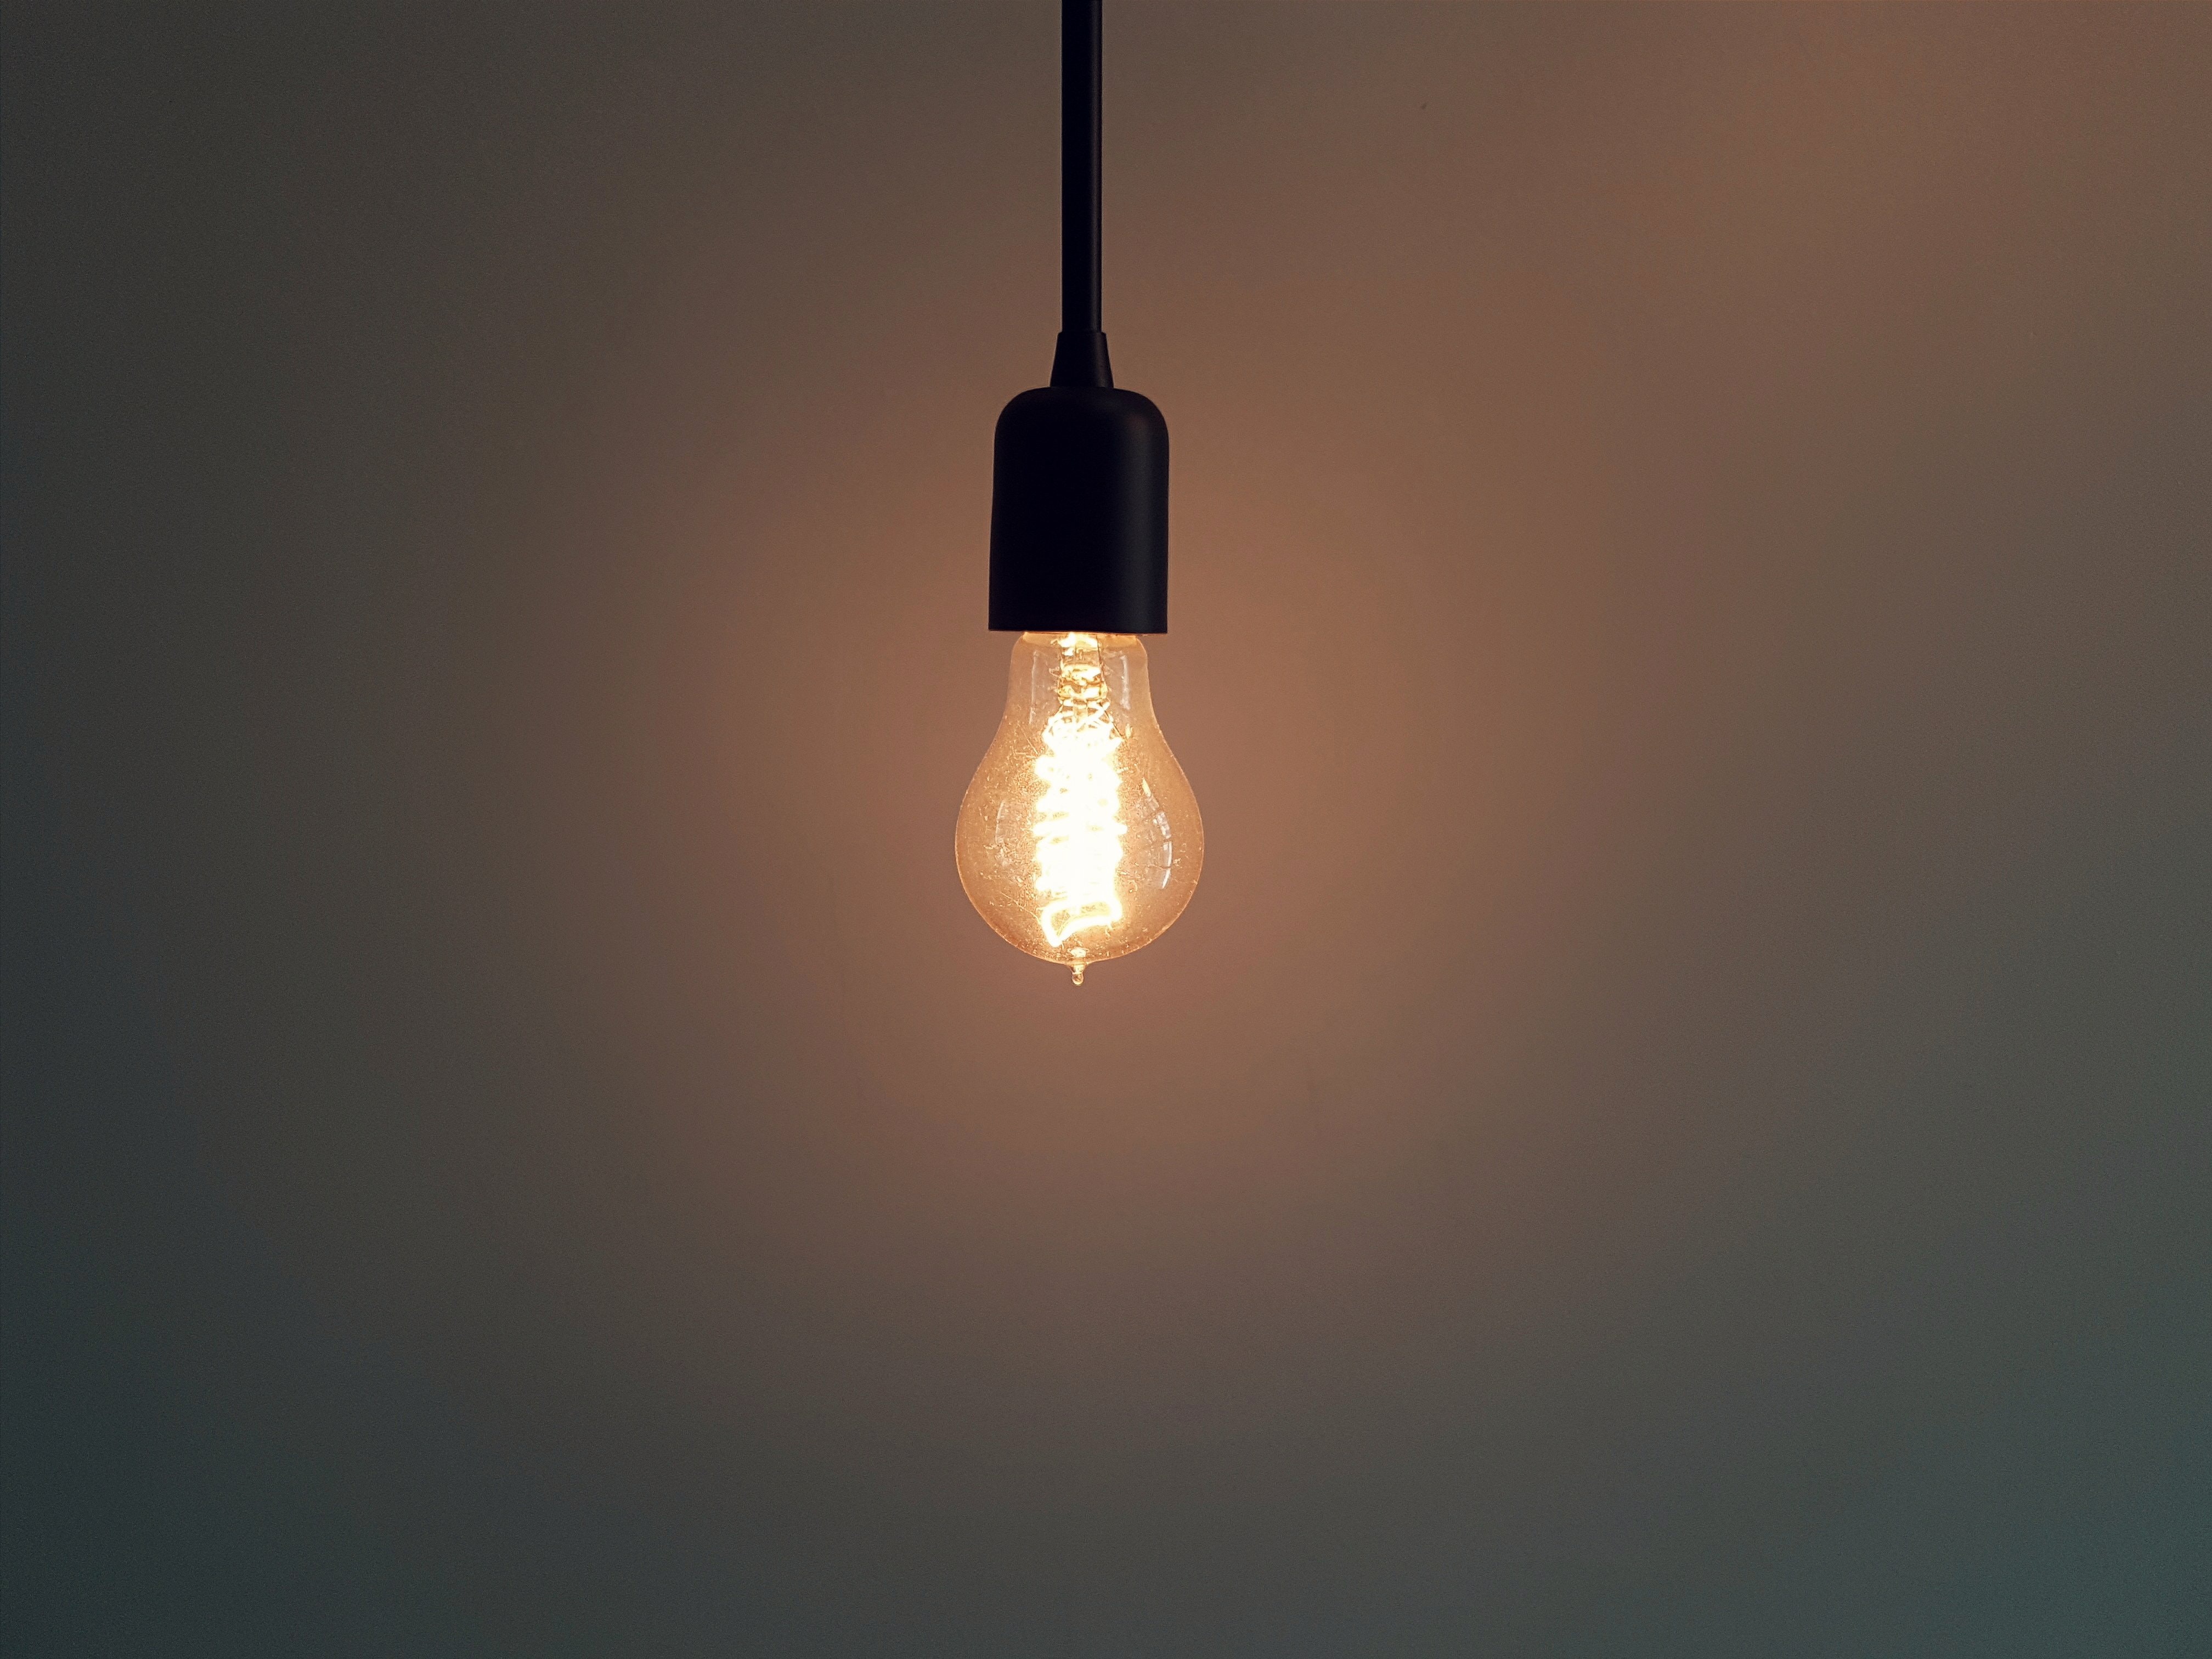 Turned on Pendant Lamp, Illuminated, Question, Power, Light bulb, HQ Photo